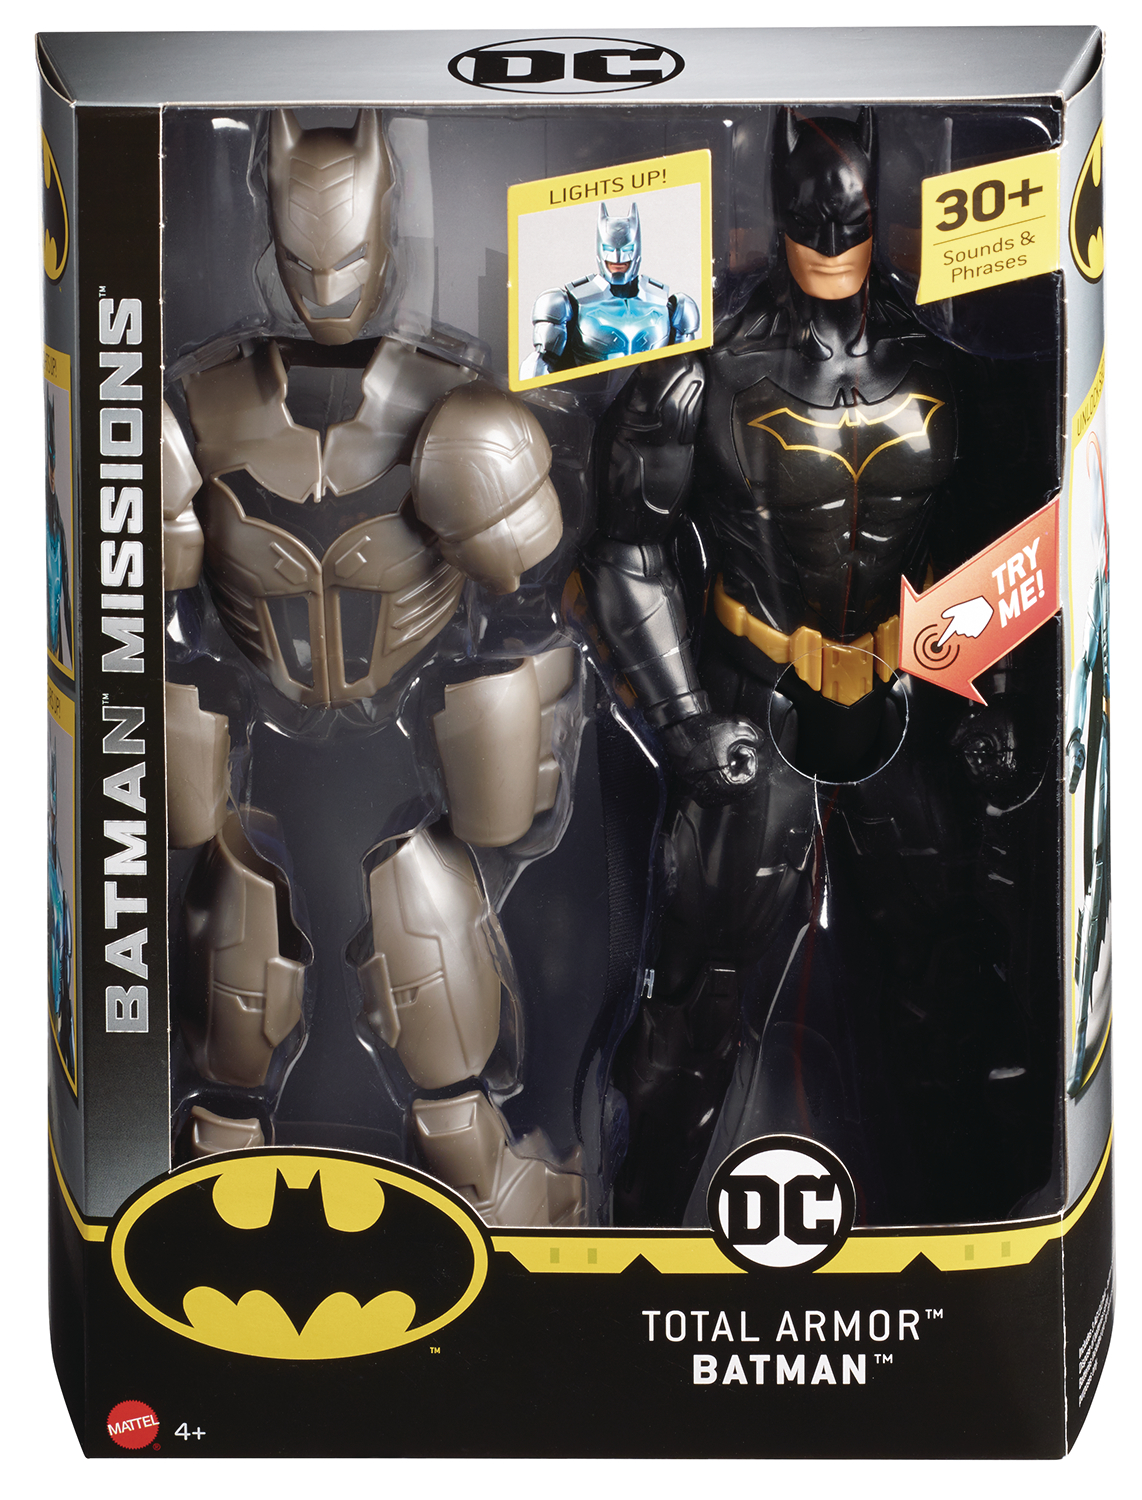 Mattel 2018 DC Comics Batman Missions Harley Quinn 6 Inch Action Figure S78 for sale online 